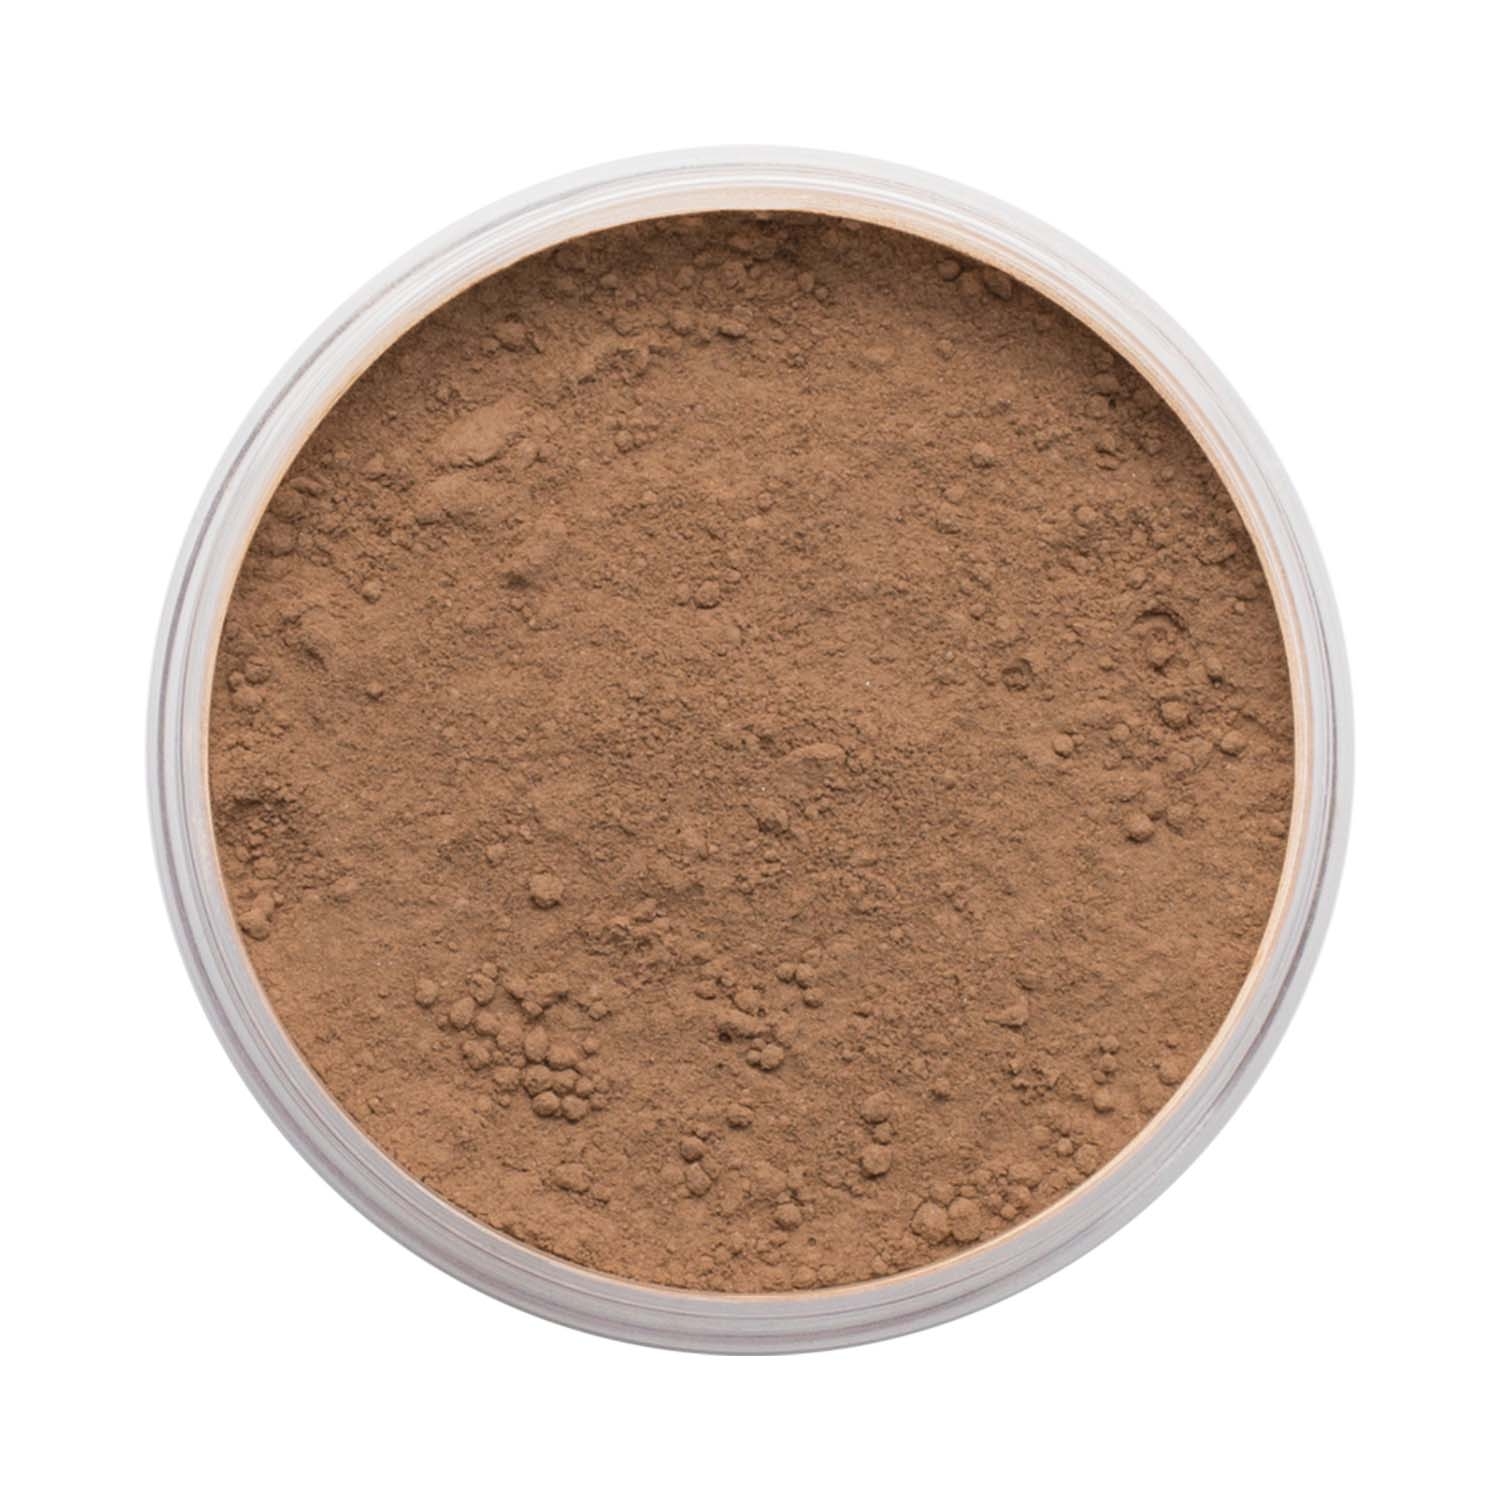 IDUN Minerals | IDUN Minerals Natural Mineral Powder Foundation - Ylva (7g)